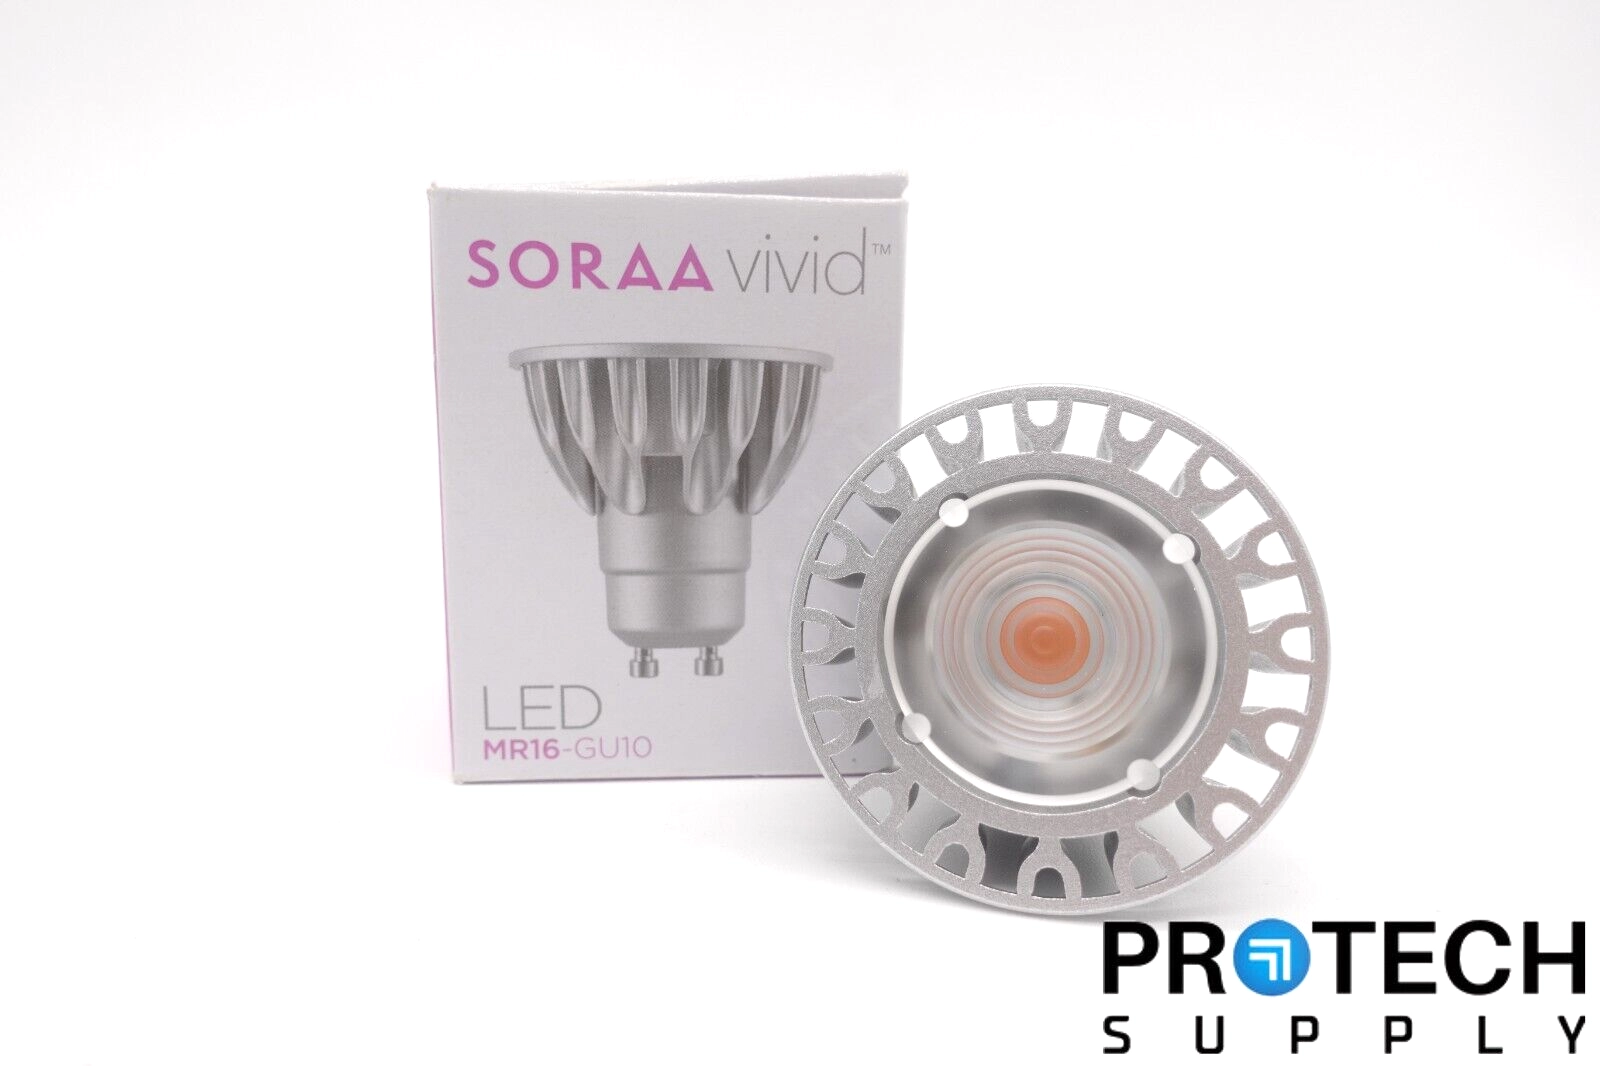 Soraa Vivid GU10 / LED Bulb GU10 2700K 60° / SM16G